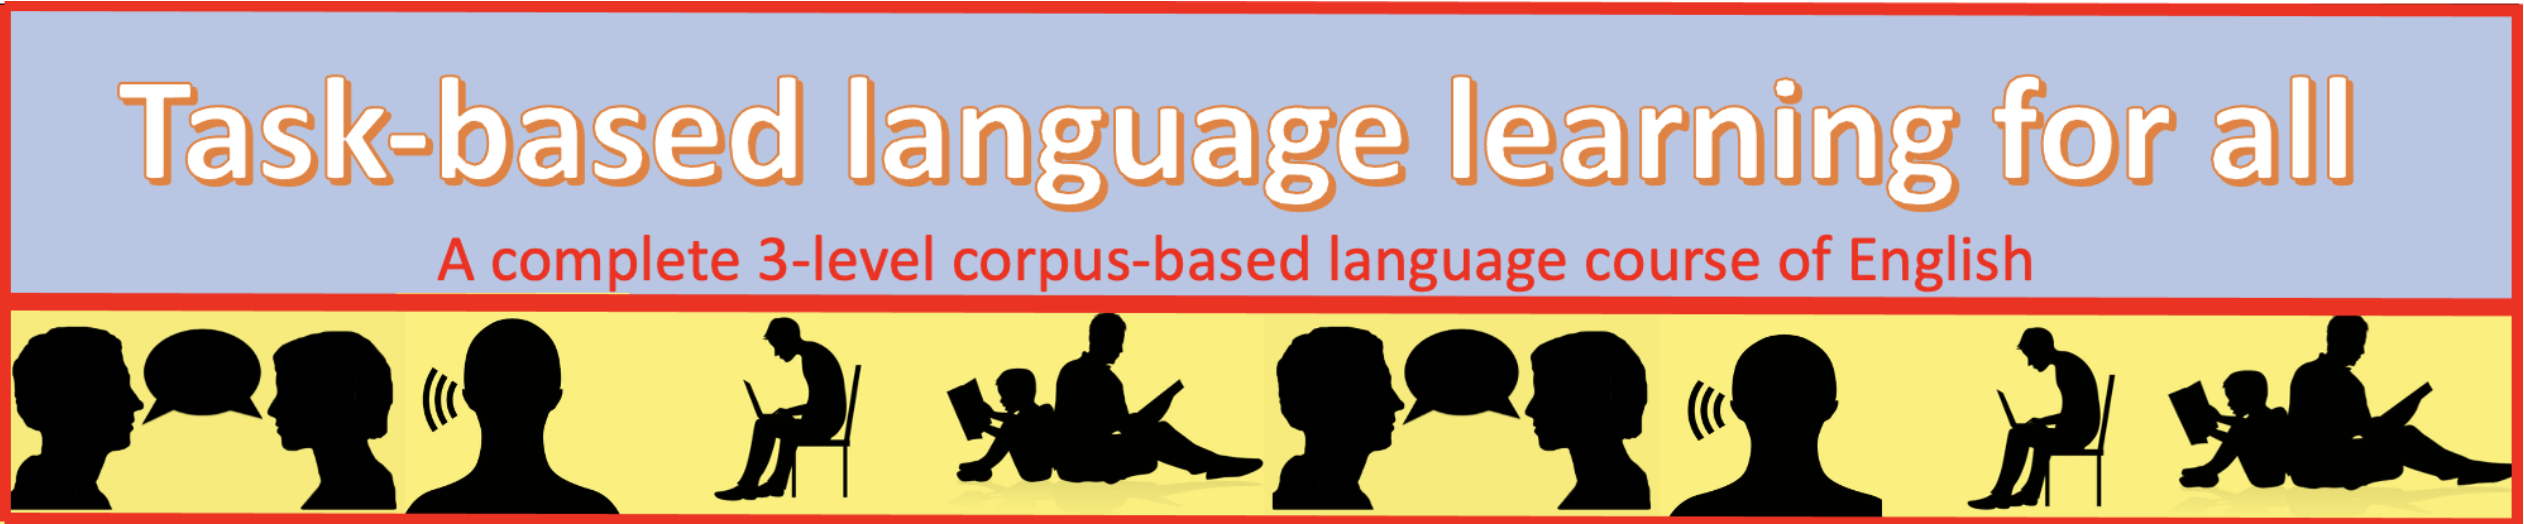 task-based language learning for all logo